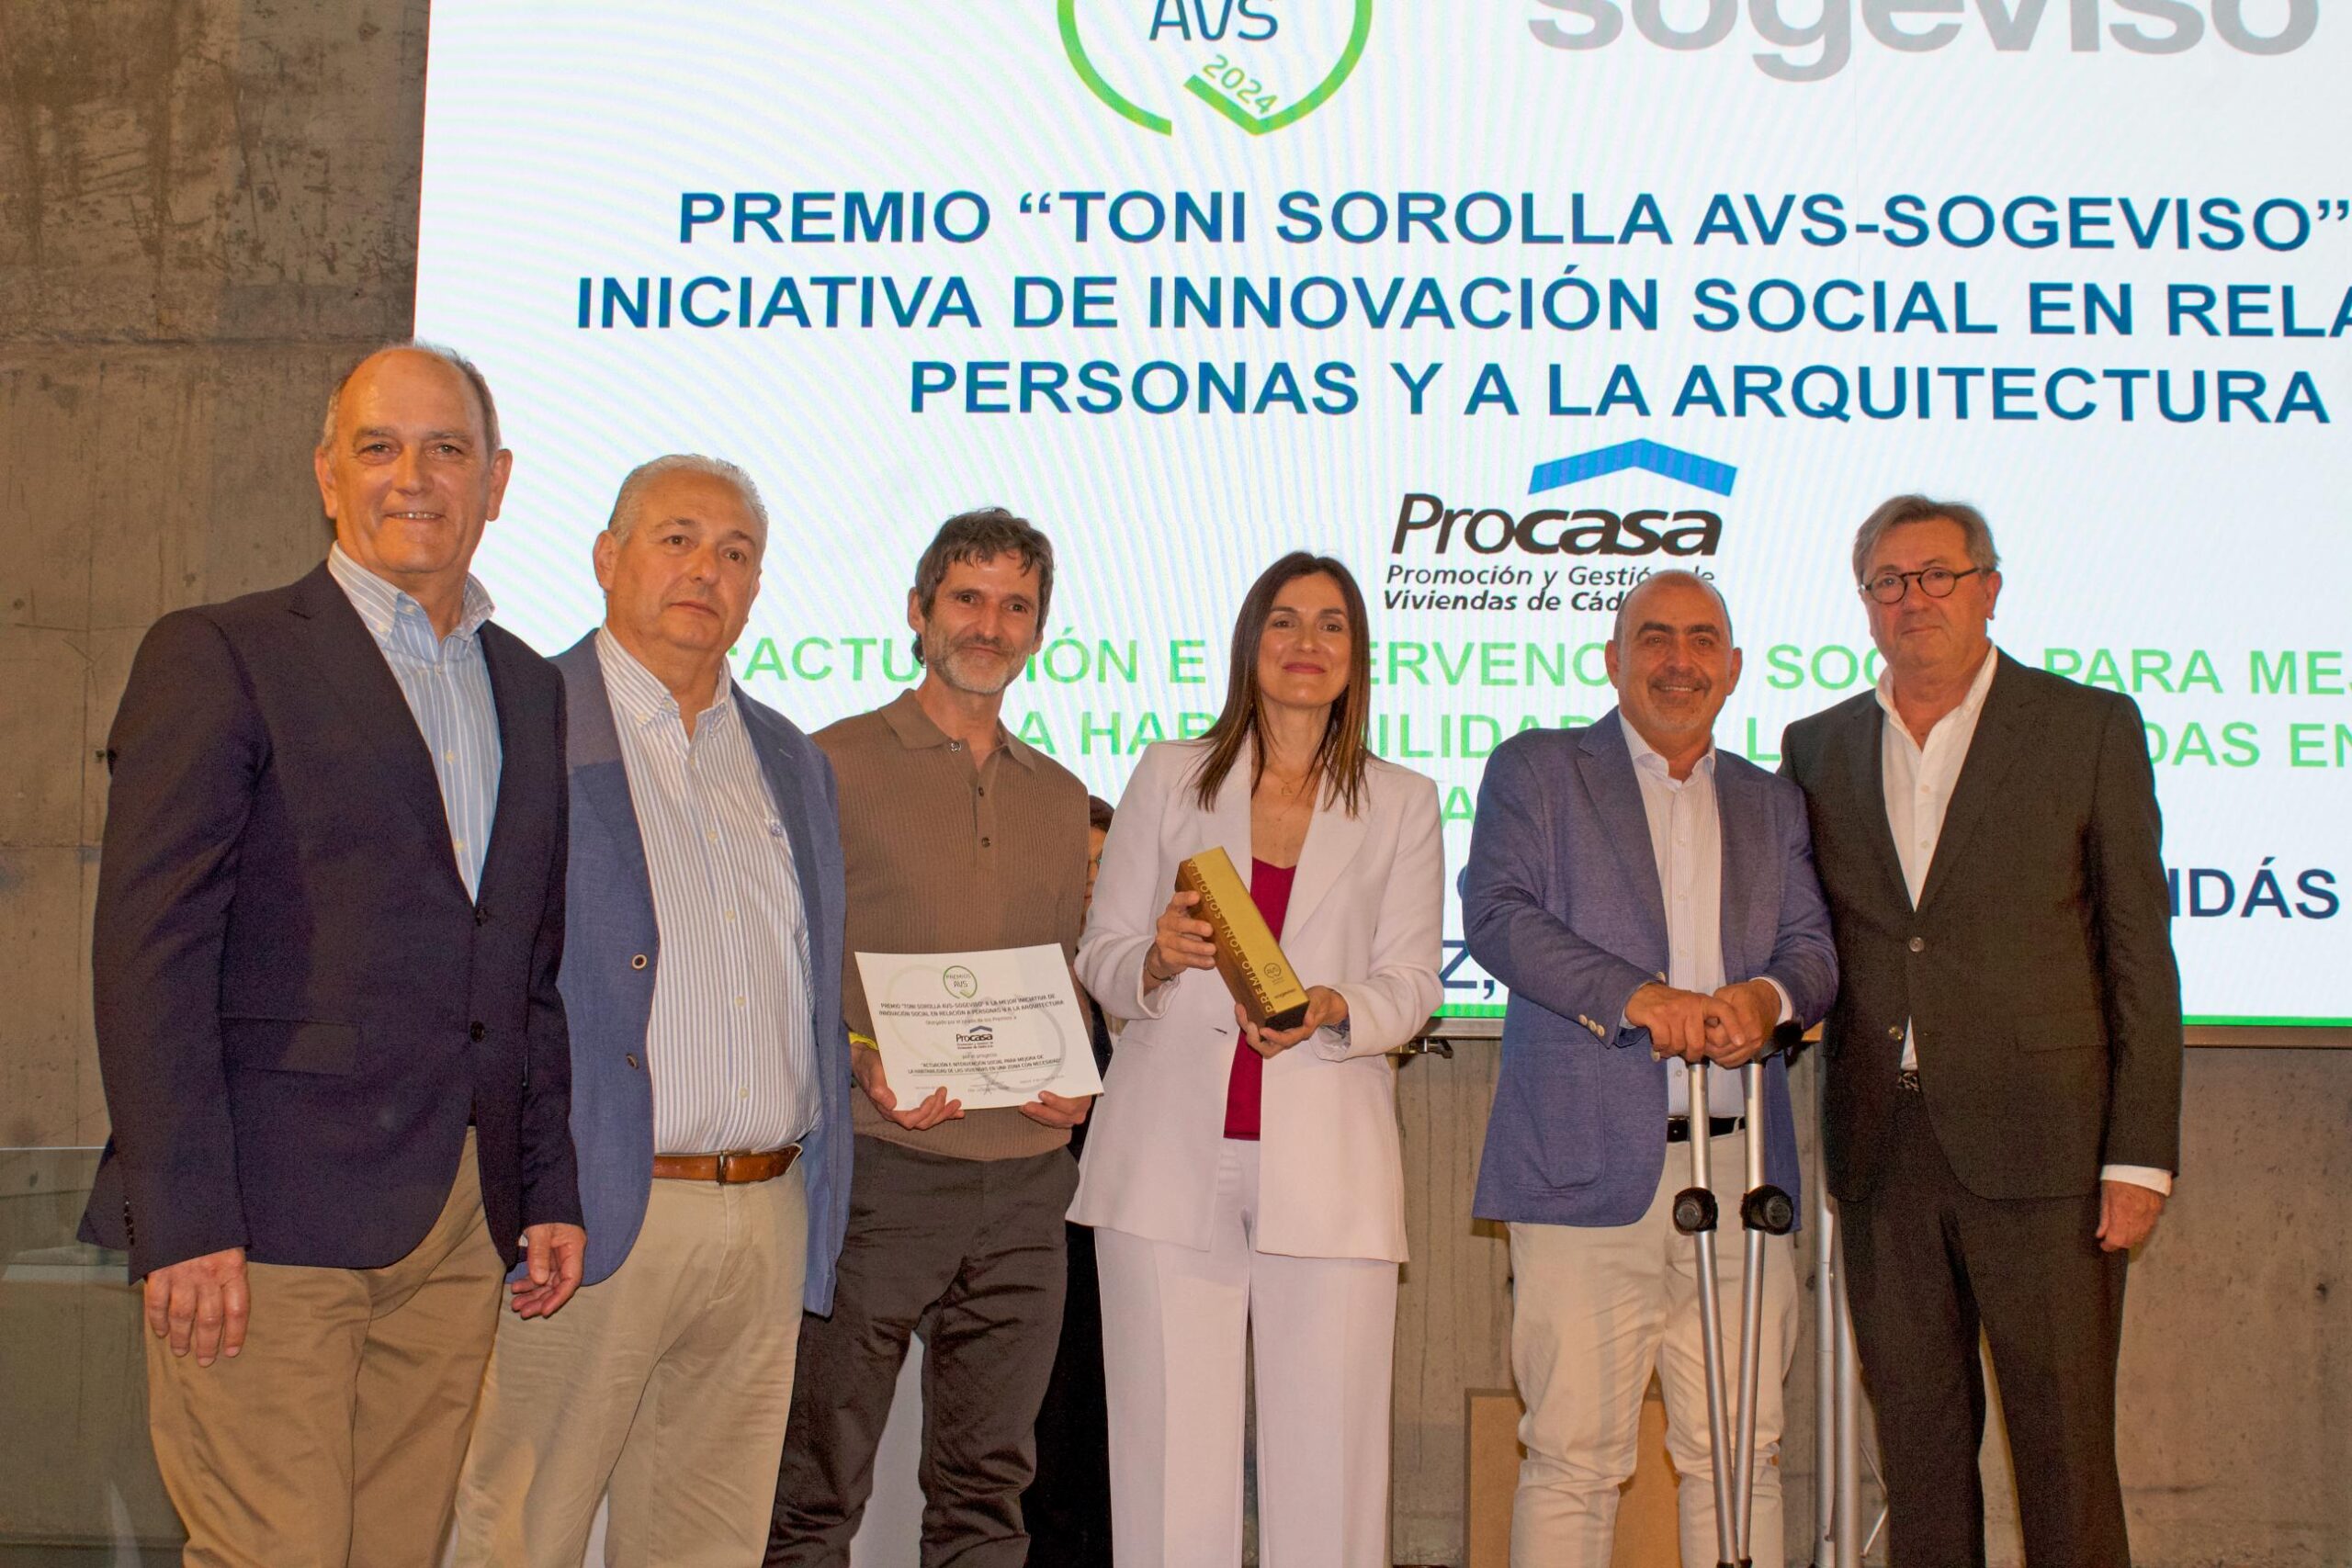 Lliurat el primer Premi Toni Sorolla, AVS-Sogeviso